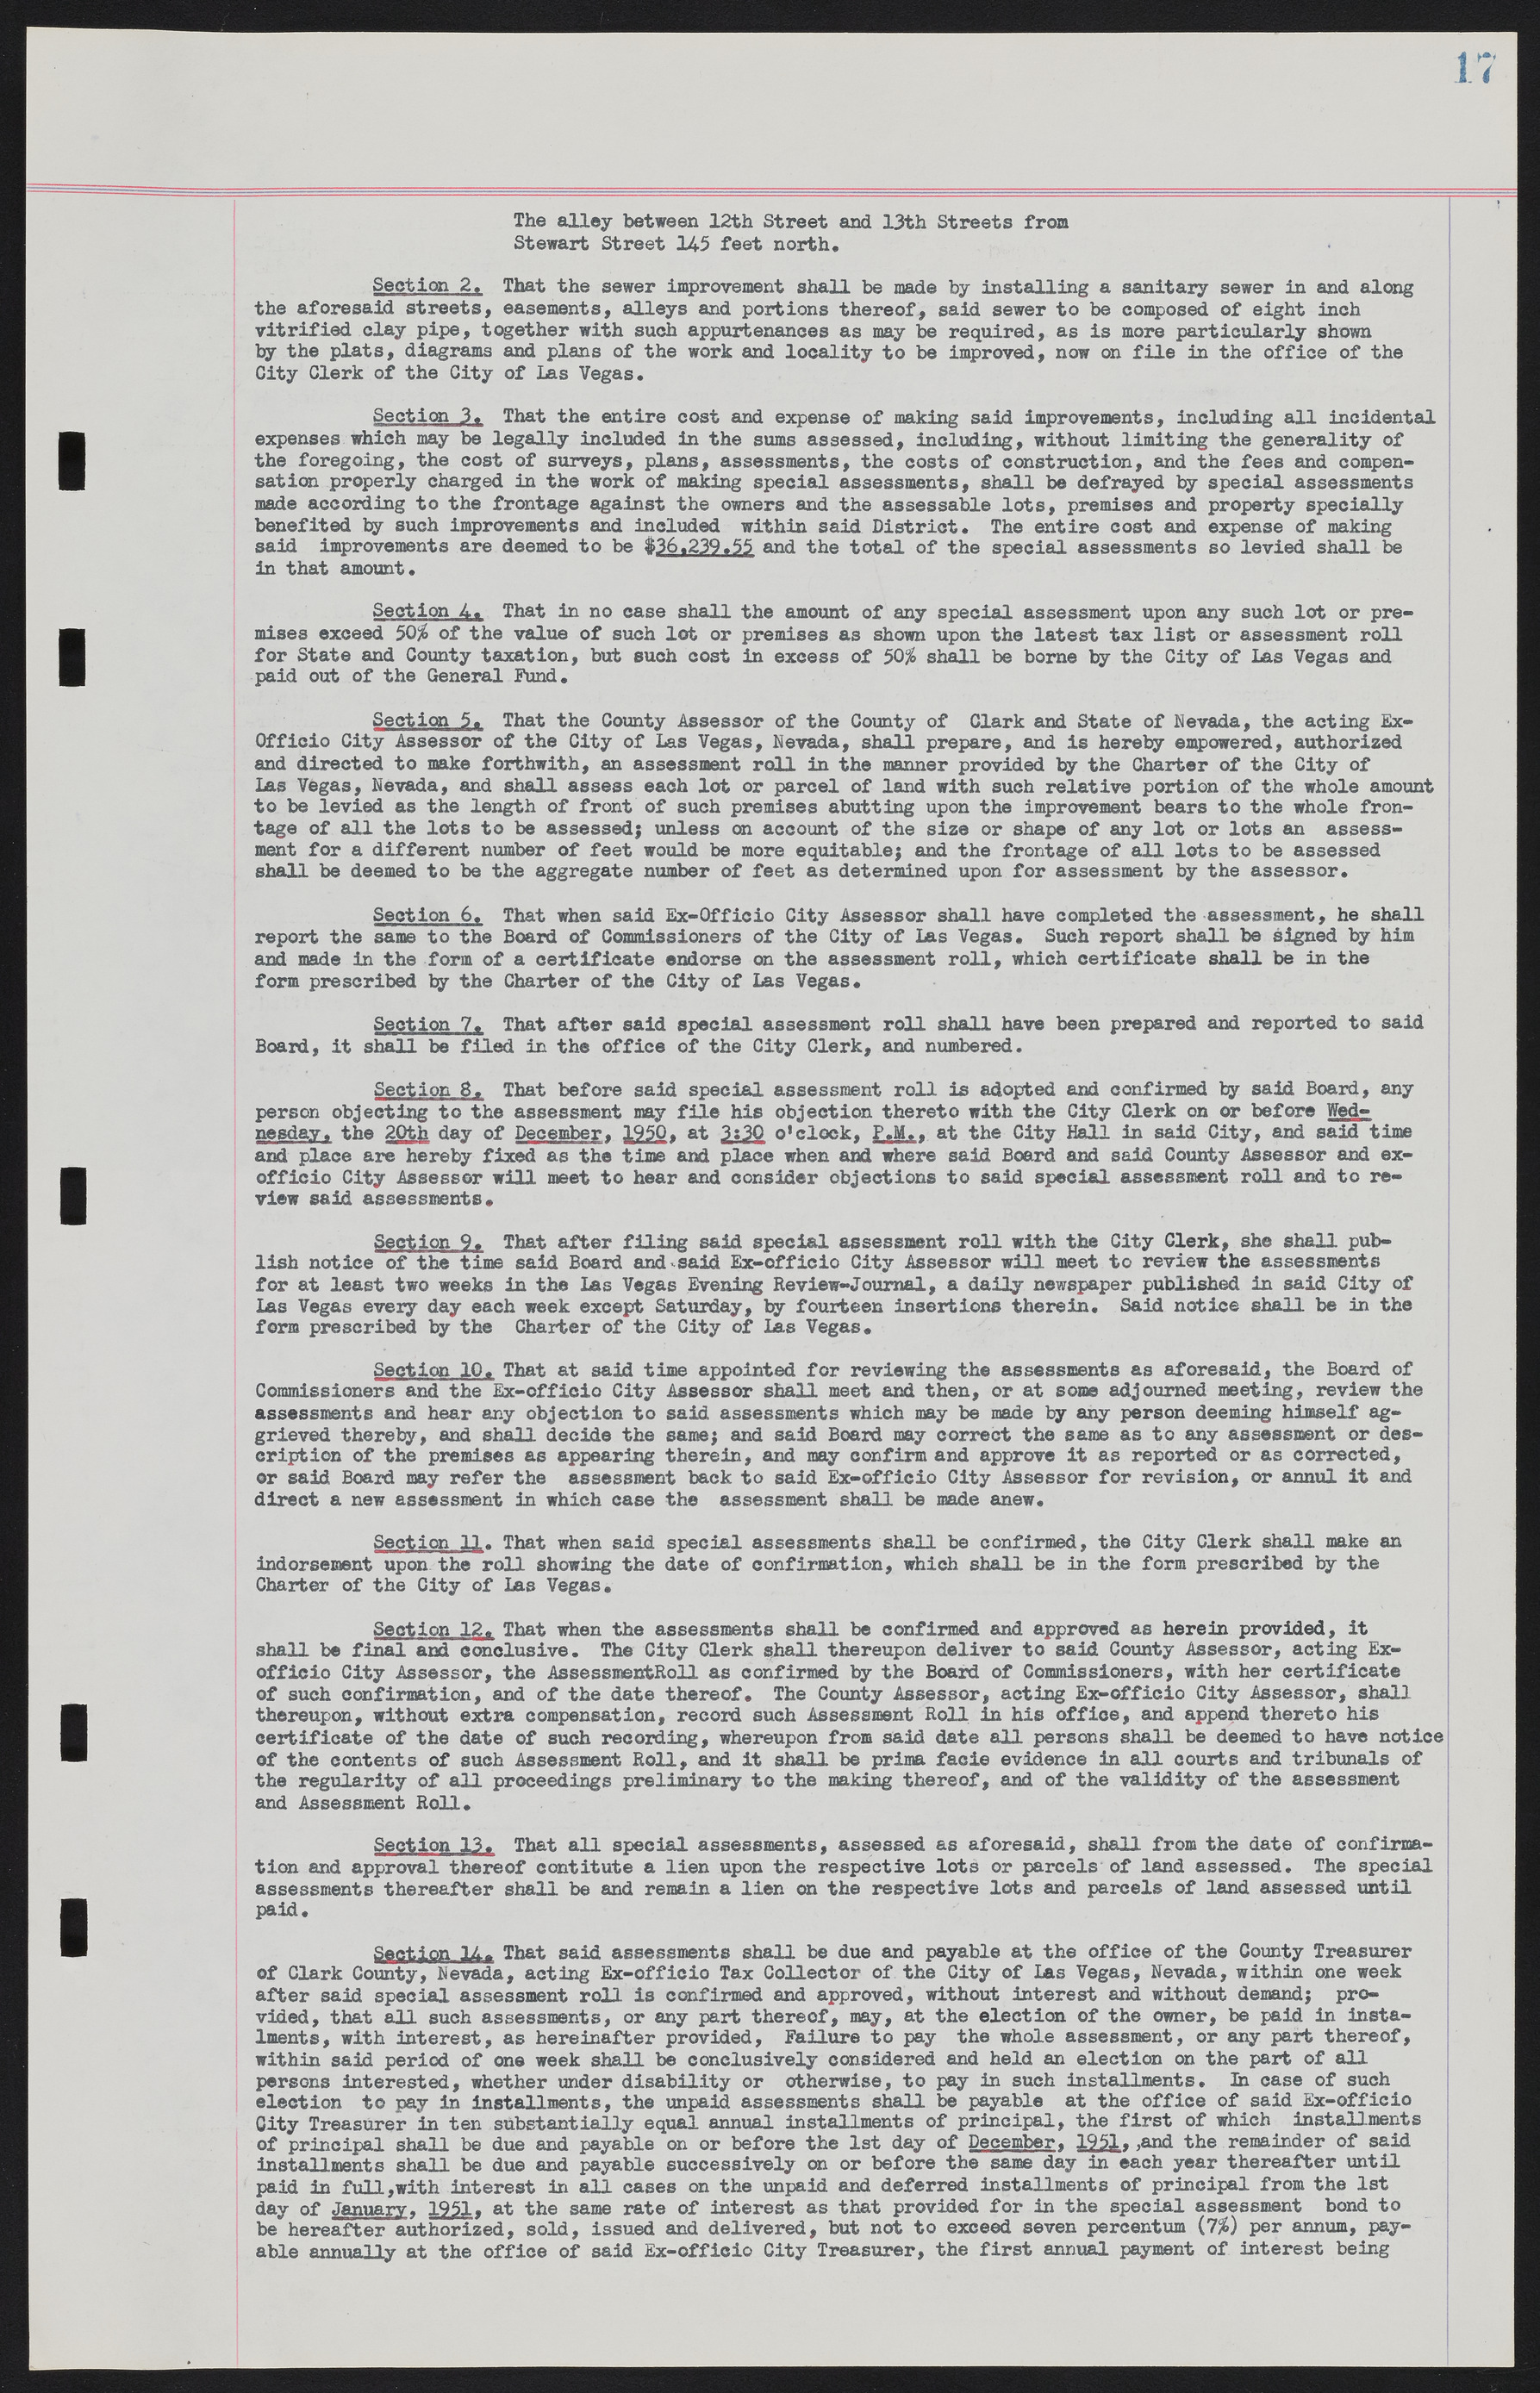 Las Vegas City Ordinances, November 13, 1950 to August 6, 1958, lvc000015-25